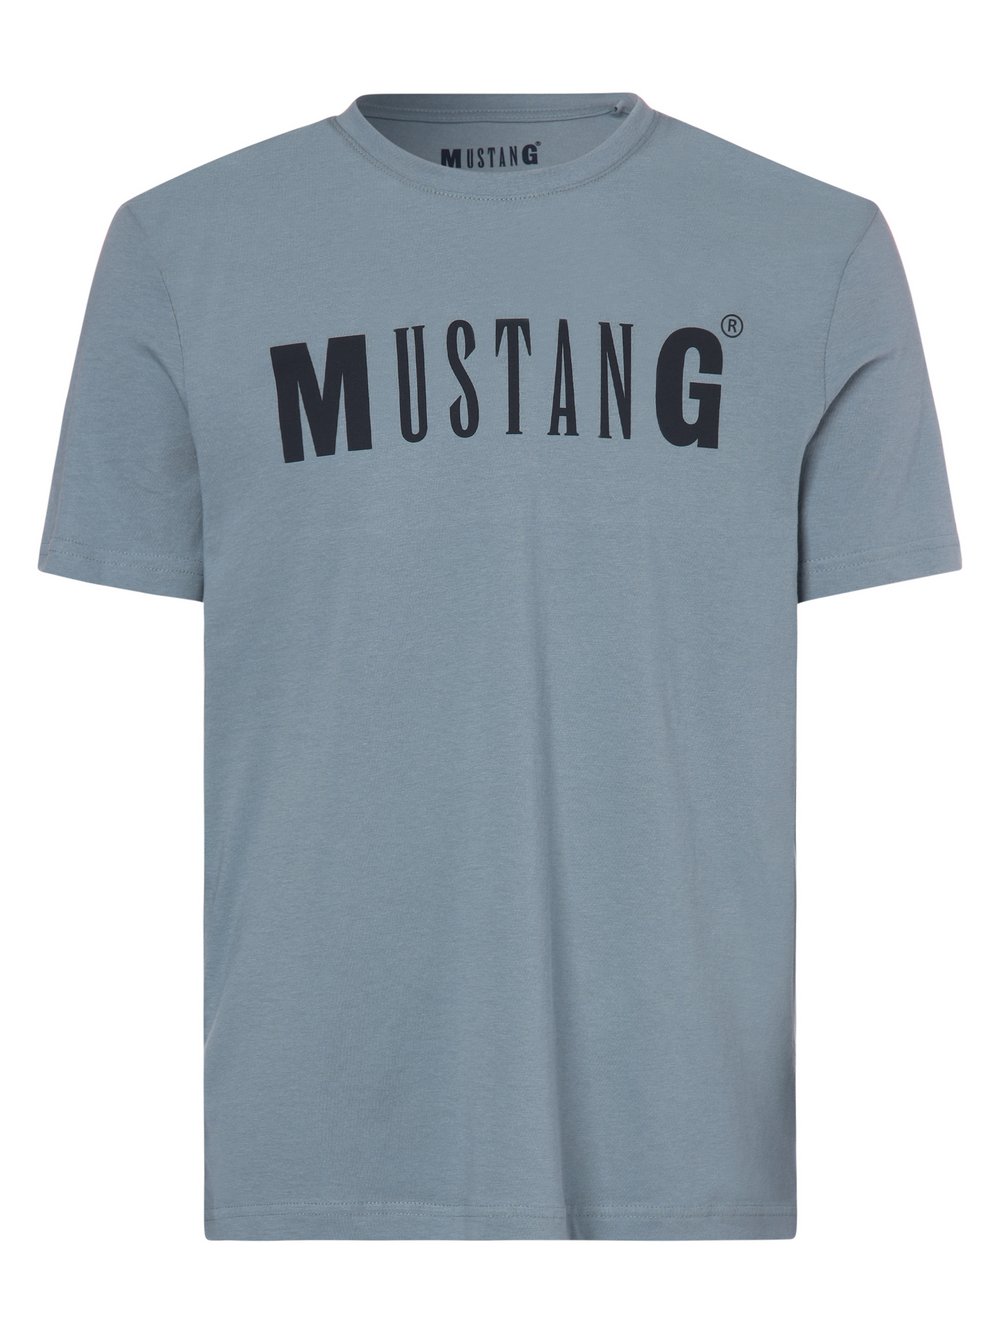 Mustang - T-shirt męski – Alex C Logo, niebieski